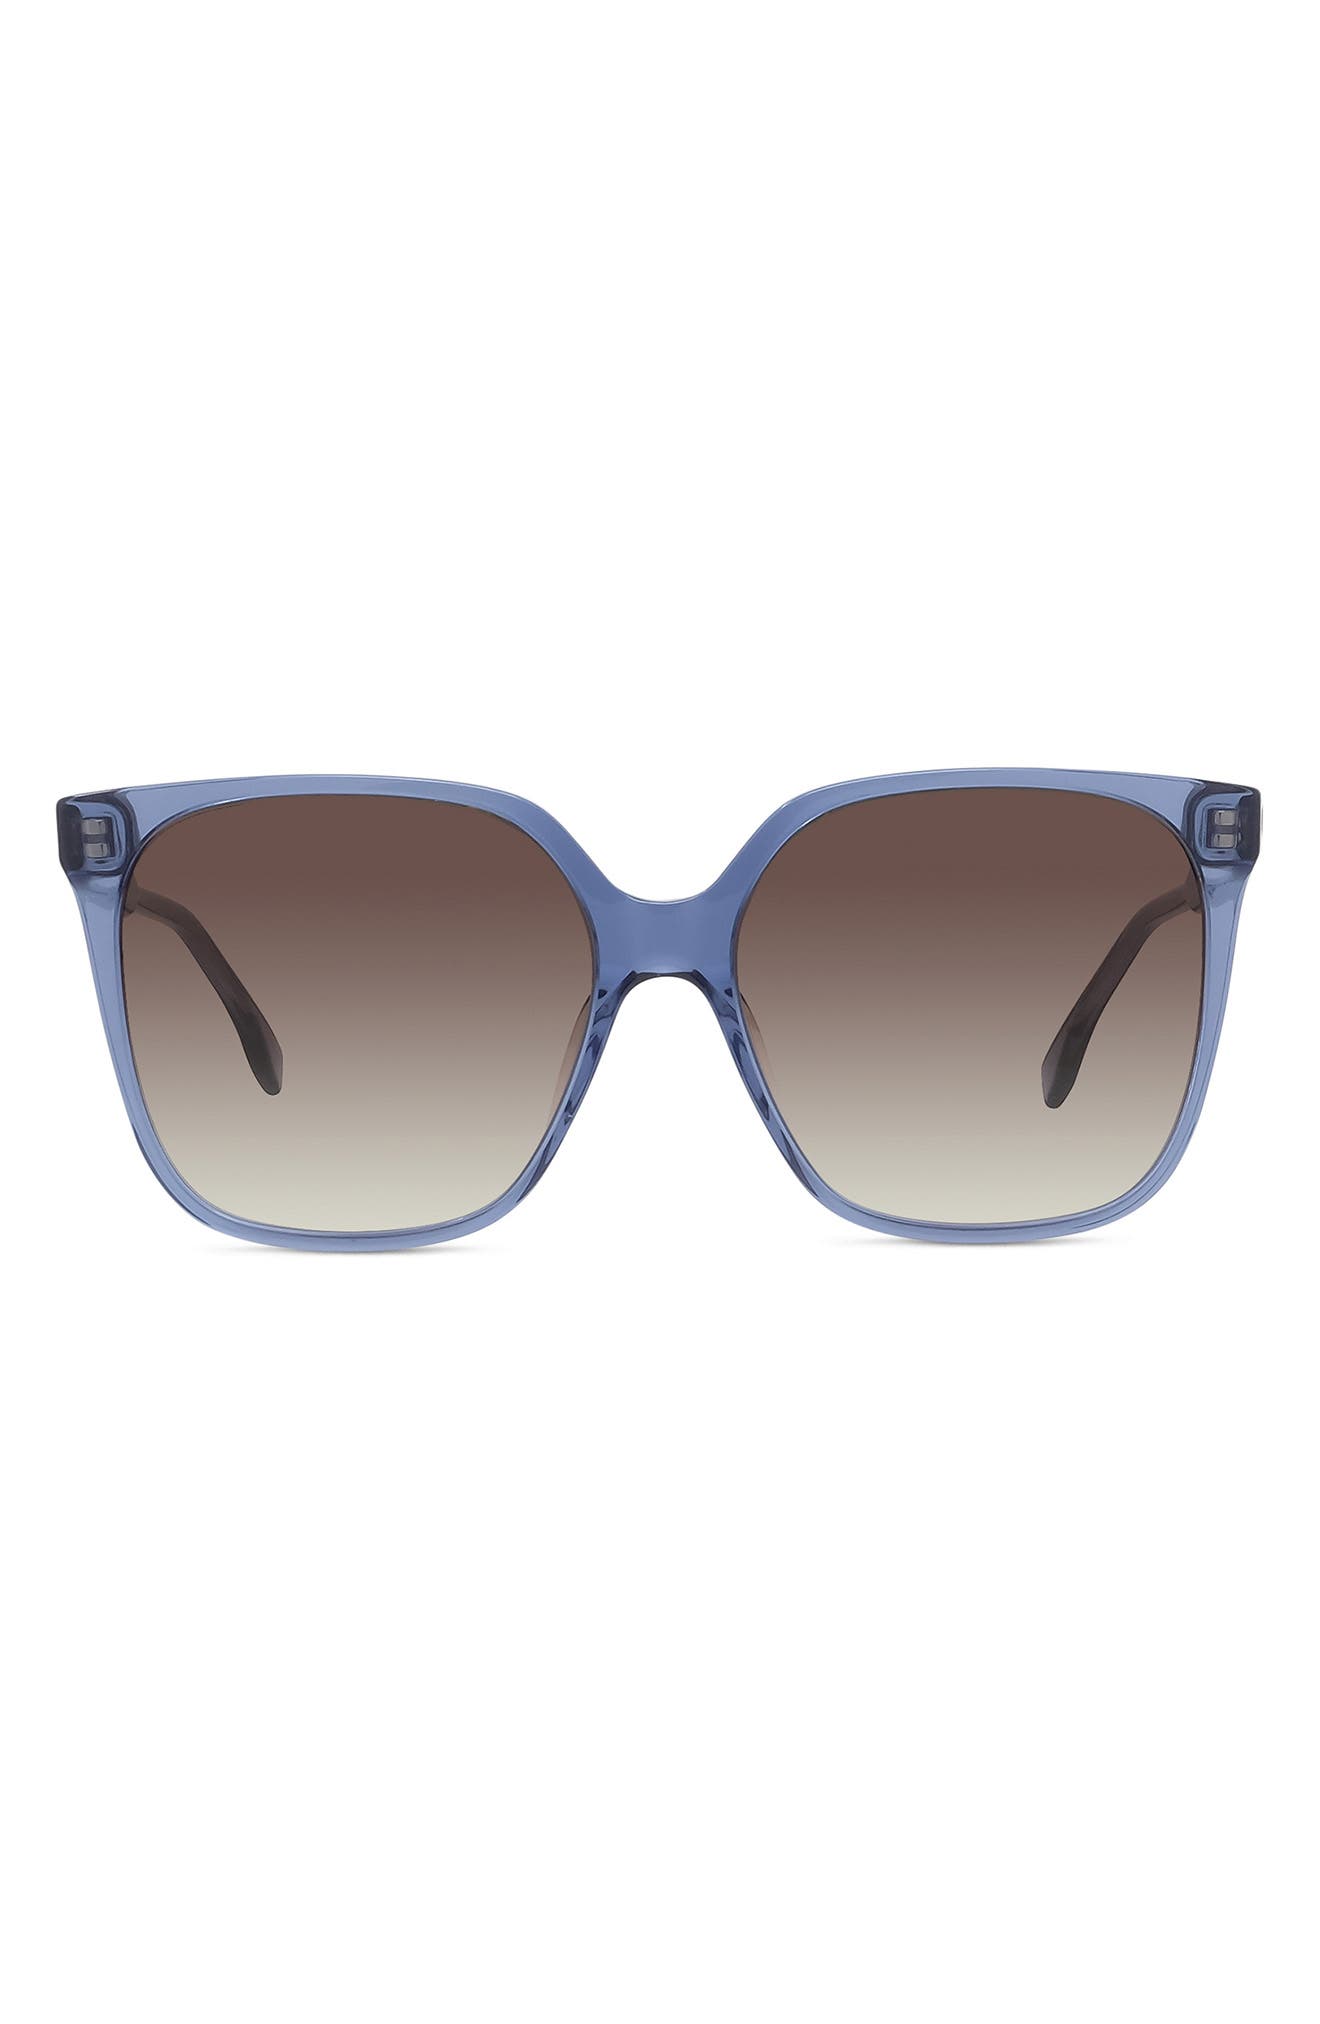 Fendi Fine 59mm Square Sunglasses in Shiny Blue /Gradient Brown at Nordstrom